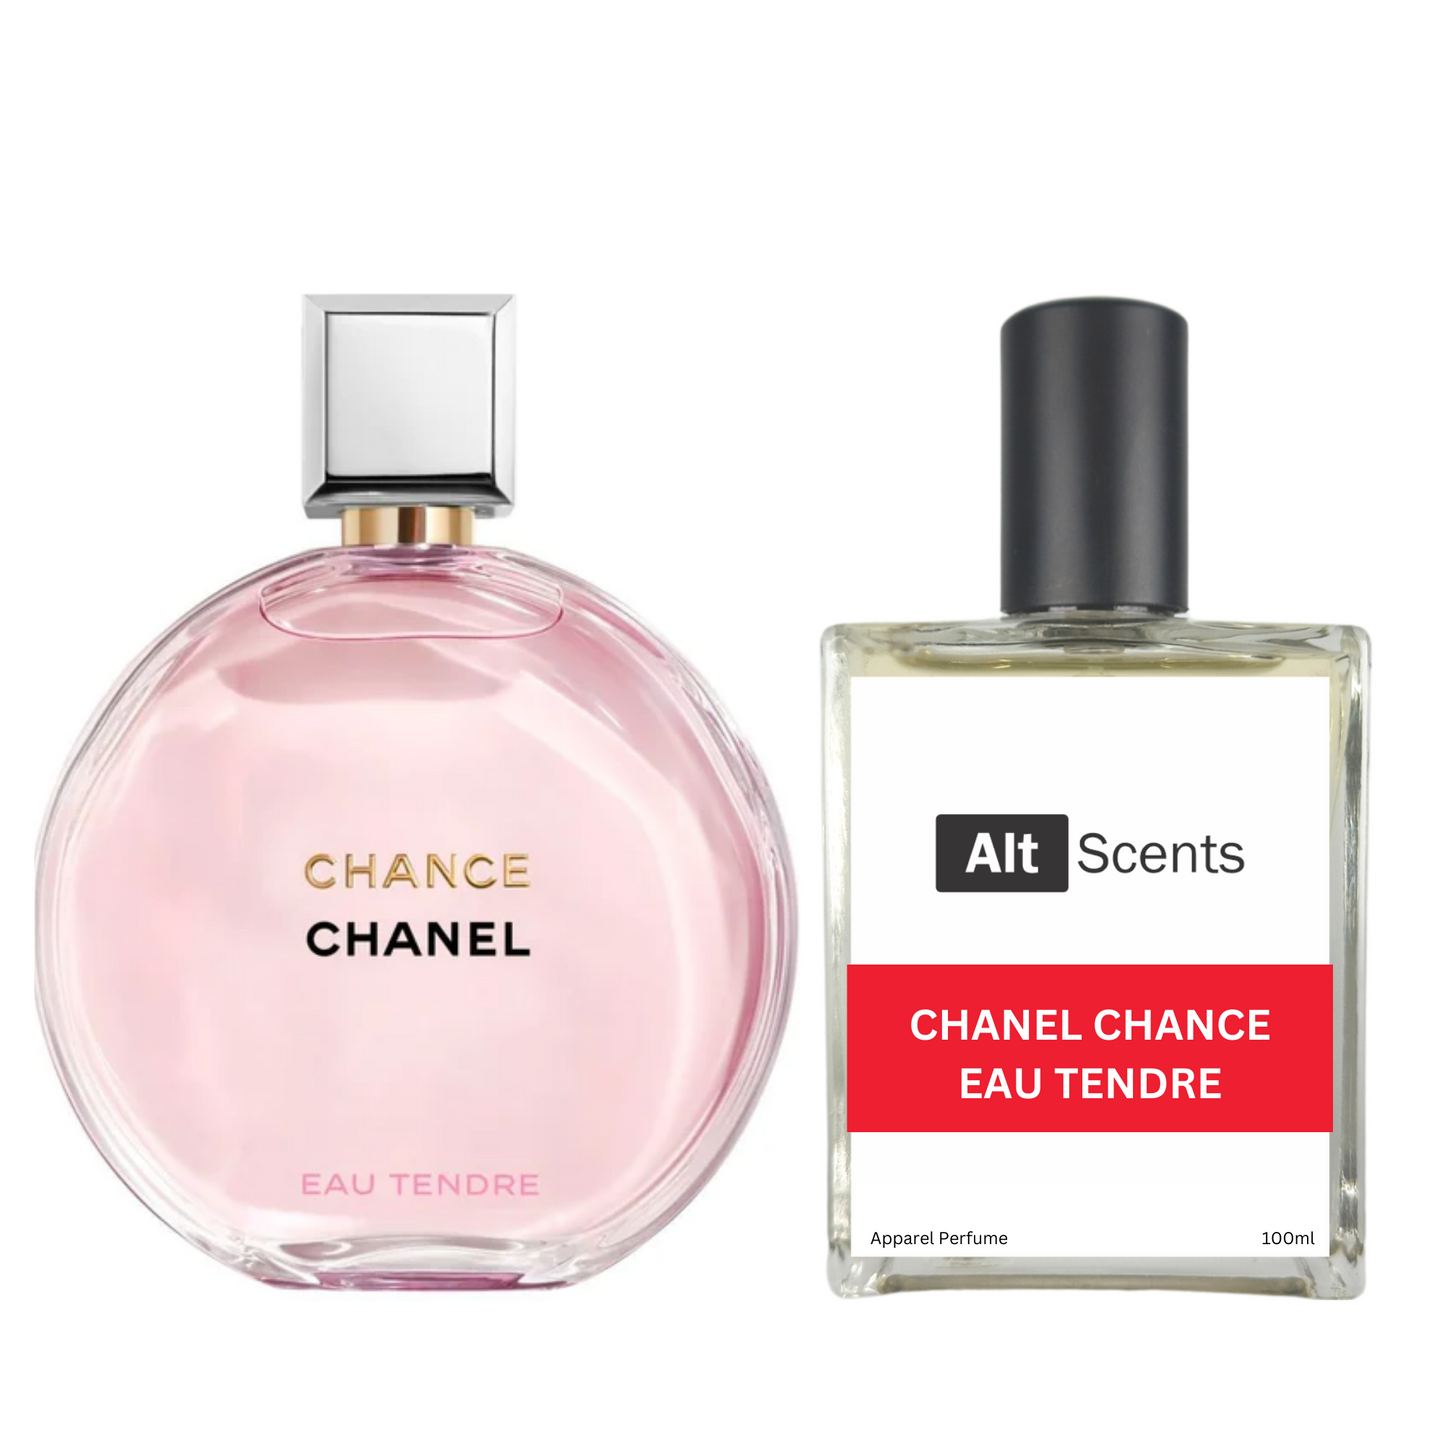 Chanel Chance Eau Tendre type Perfume for Women